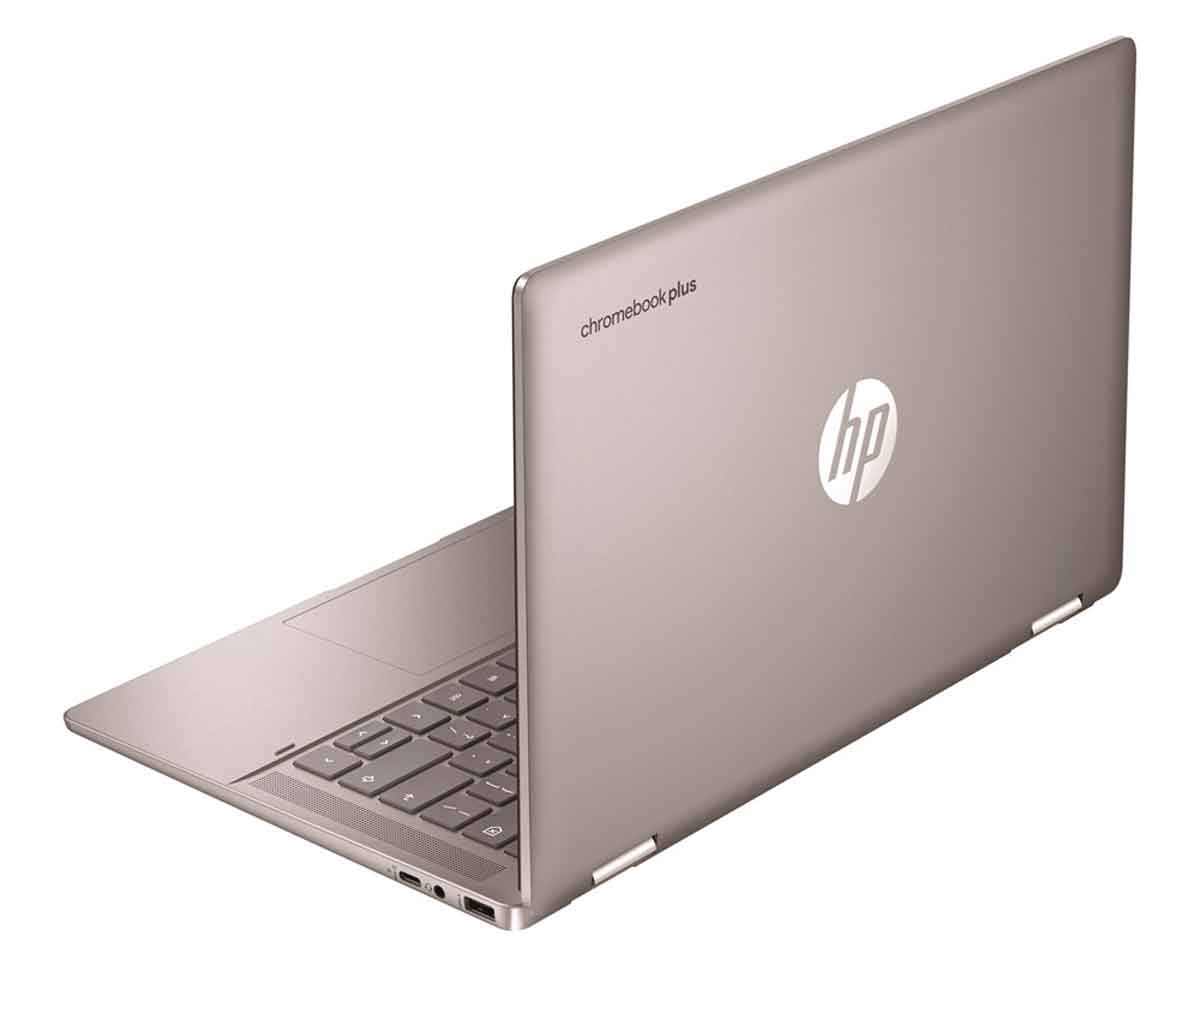 HP-Chromebook-Plus-x360-14-pulgadas